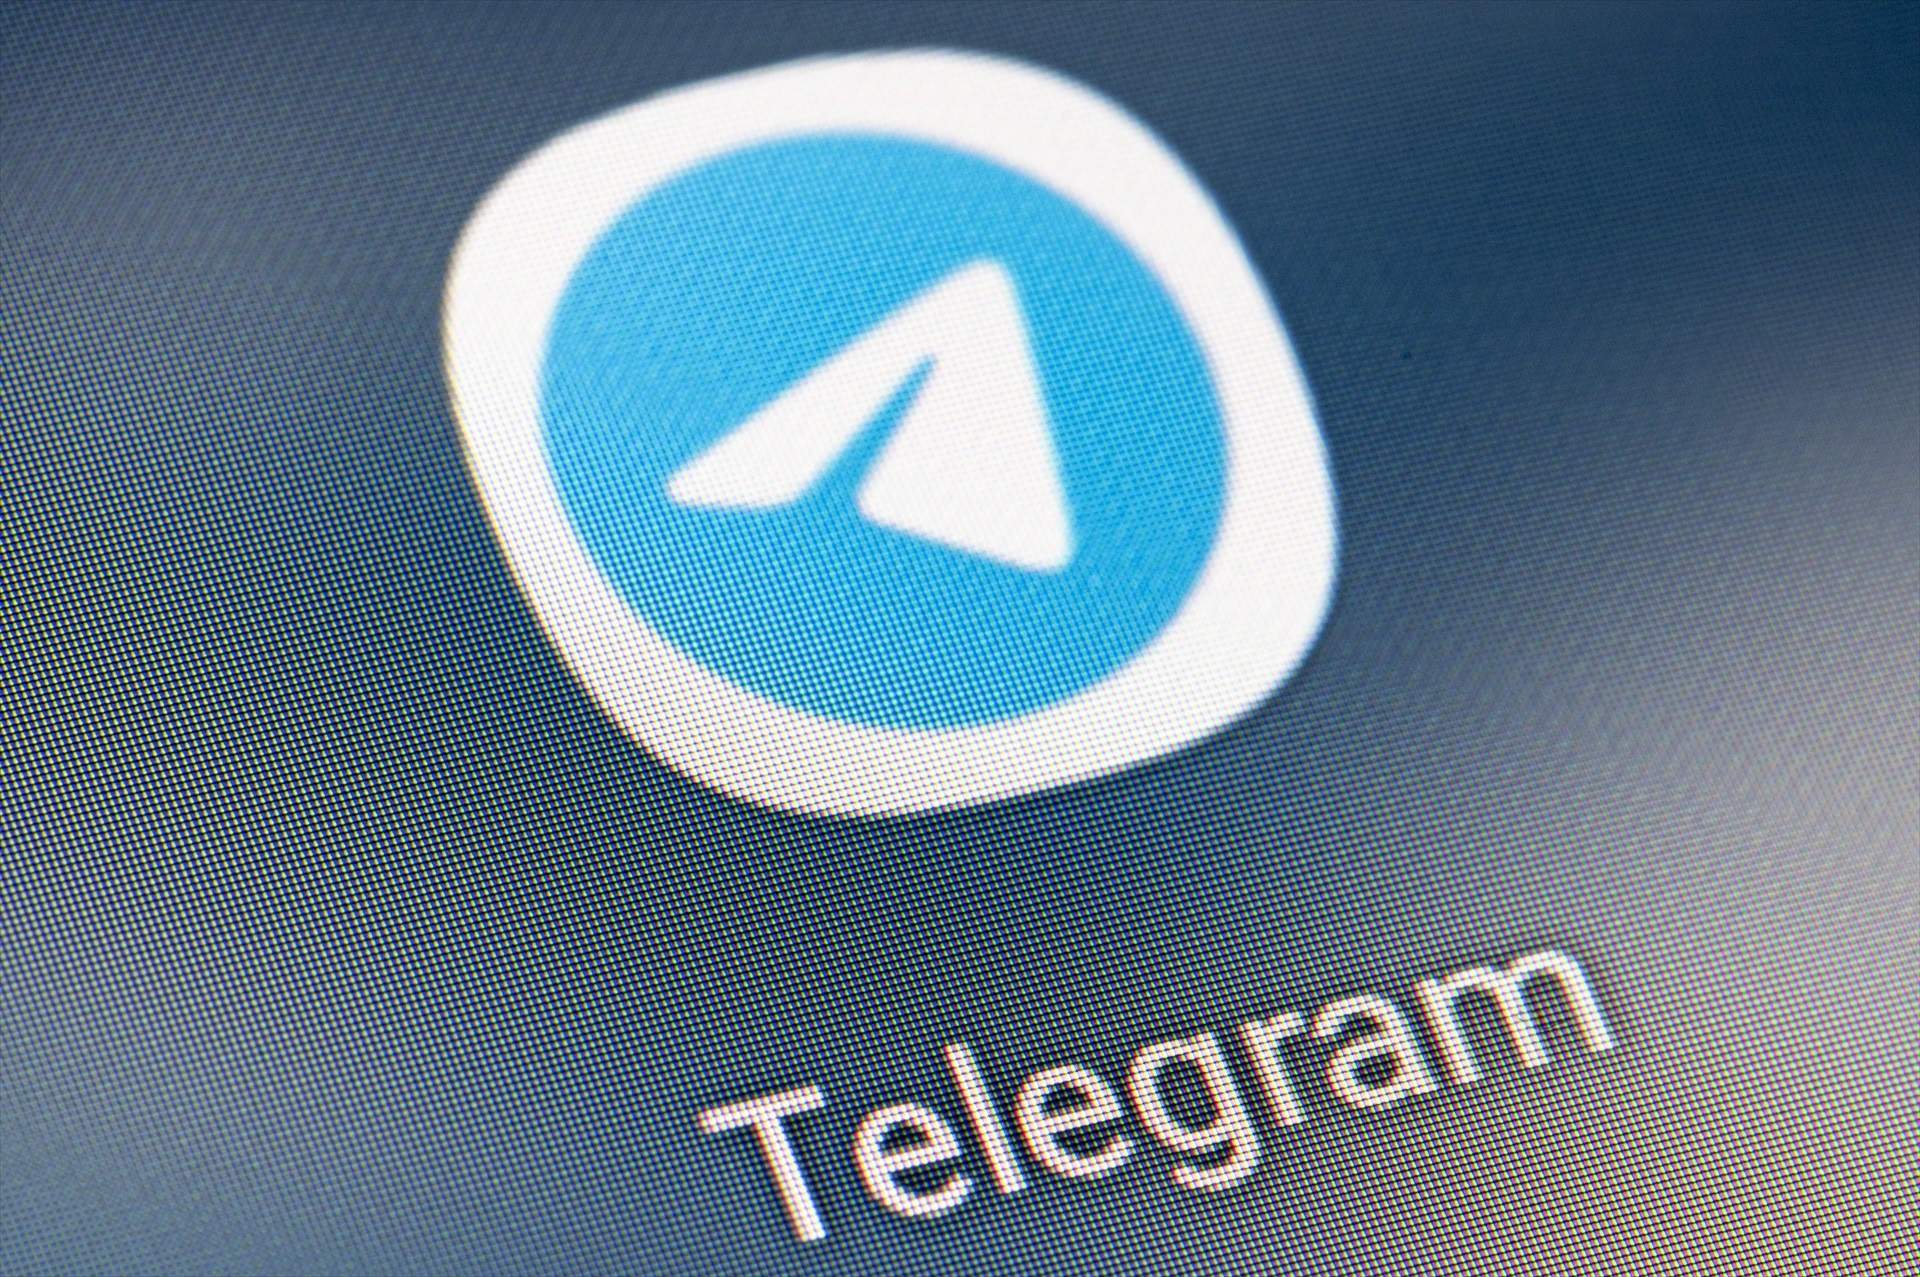 Telegram continua funcionant malgrat el bloqueig de la justícia espanyola